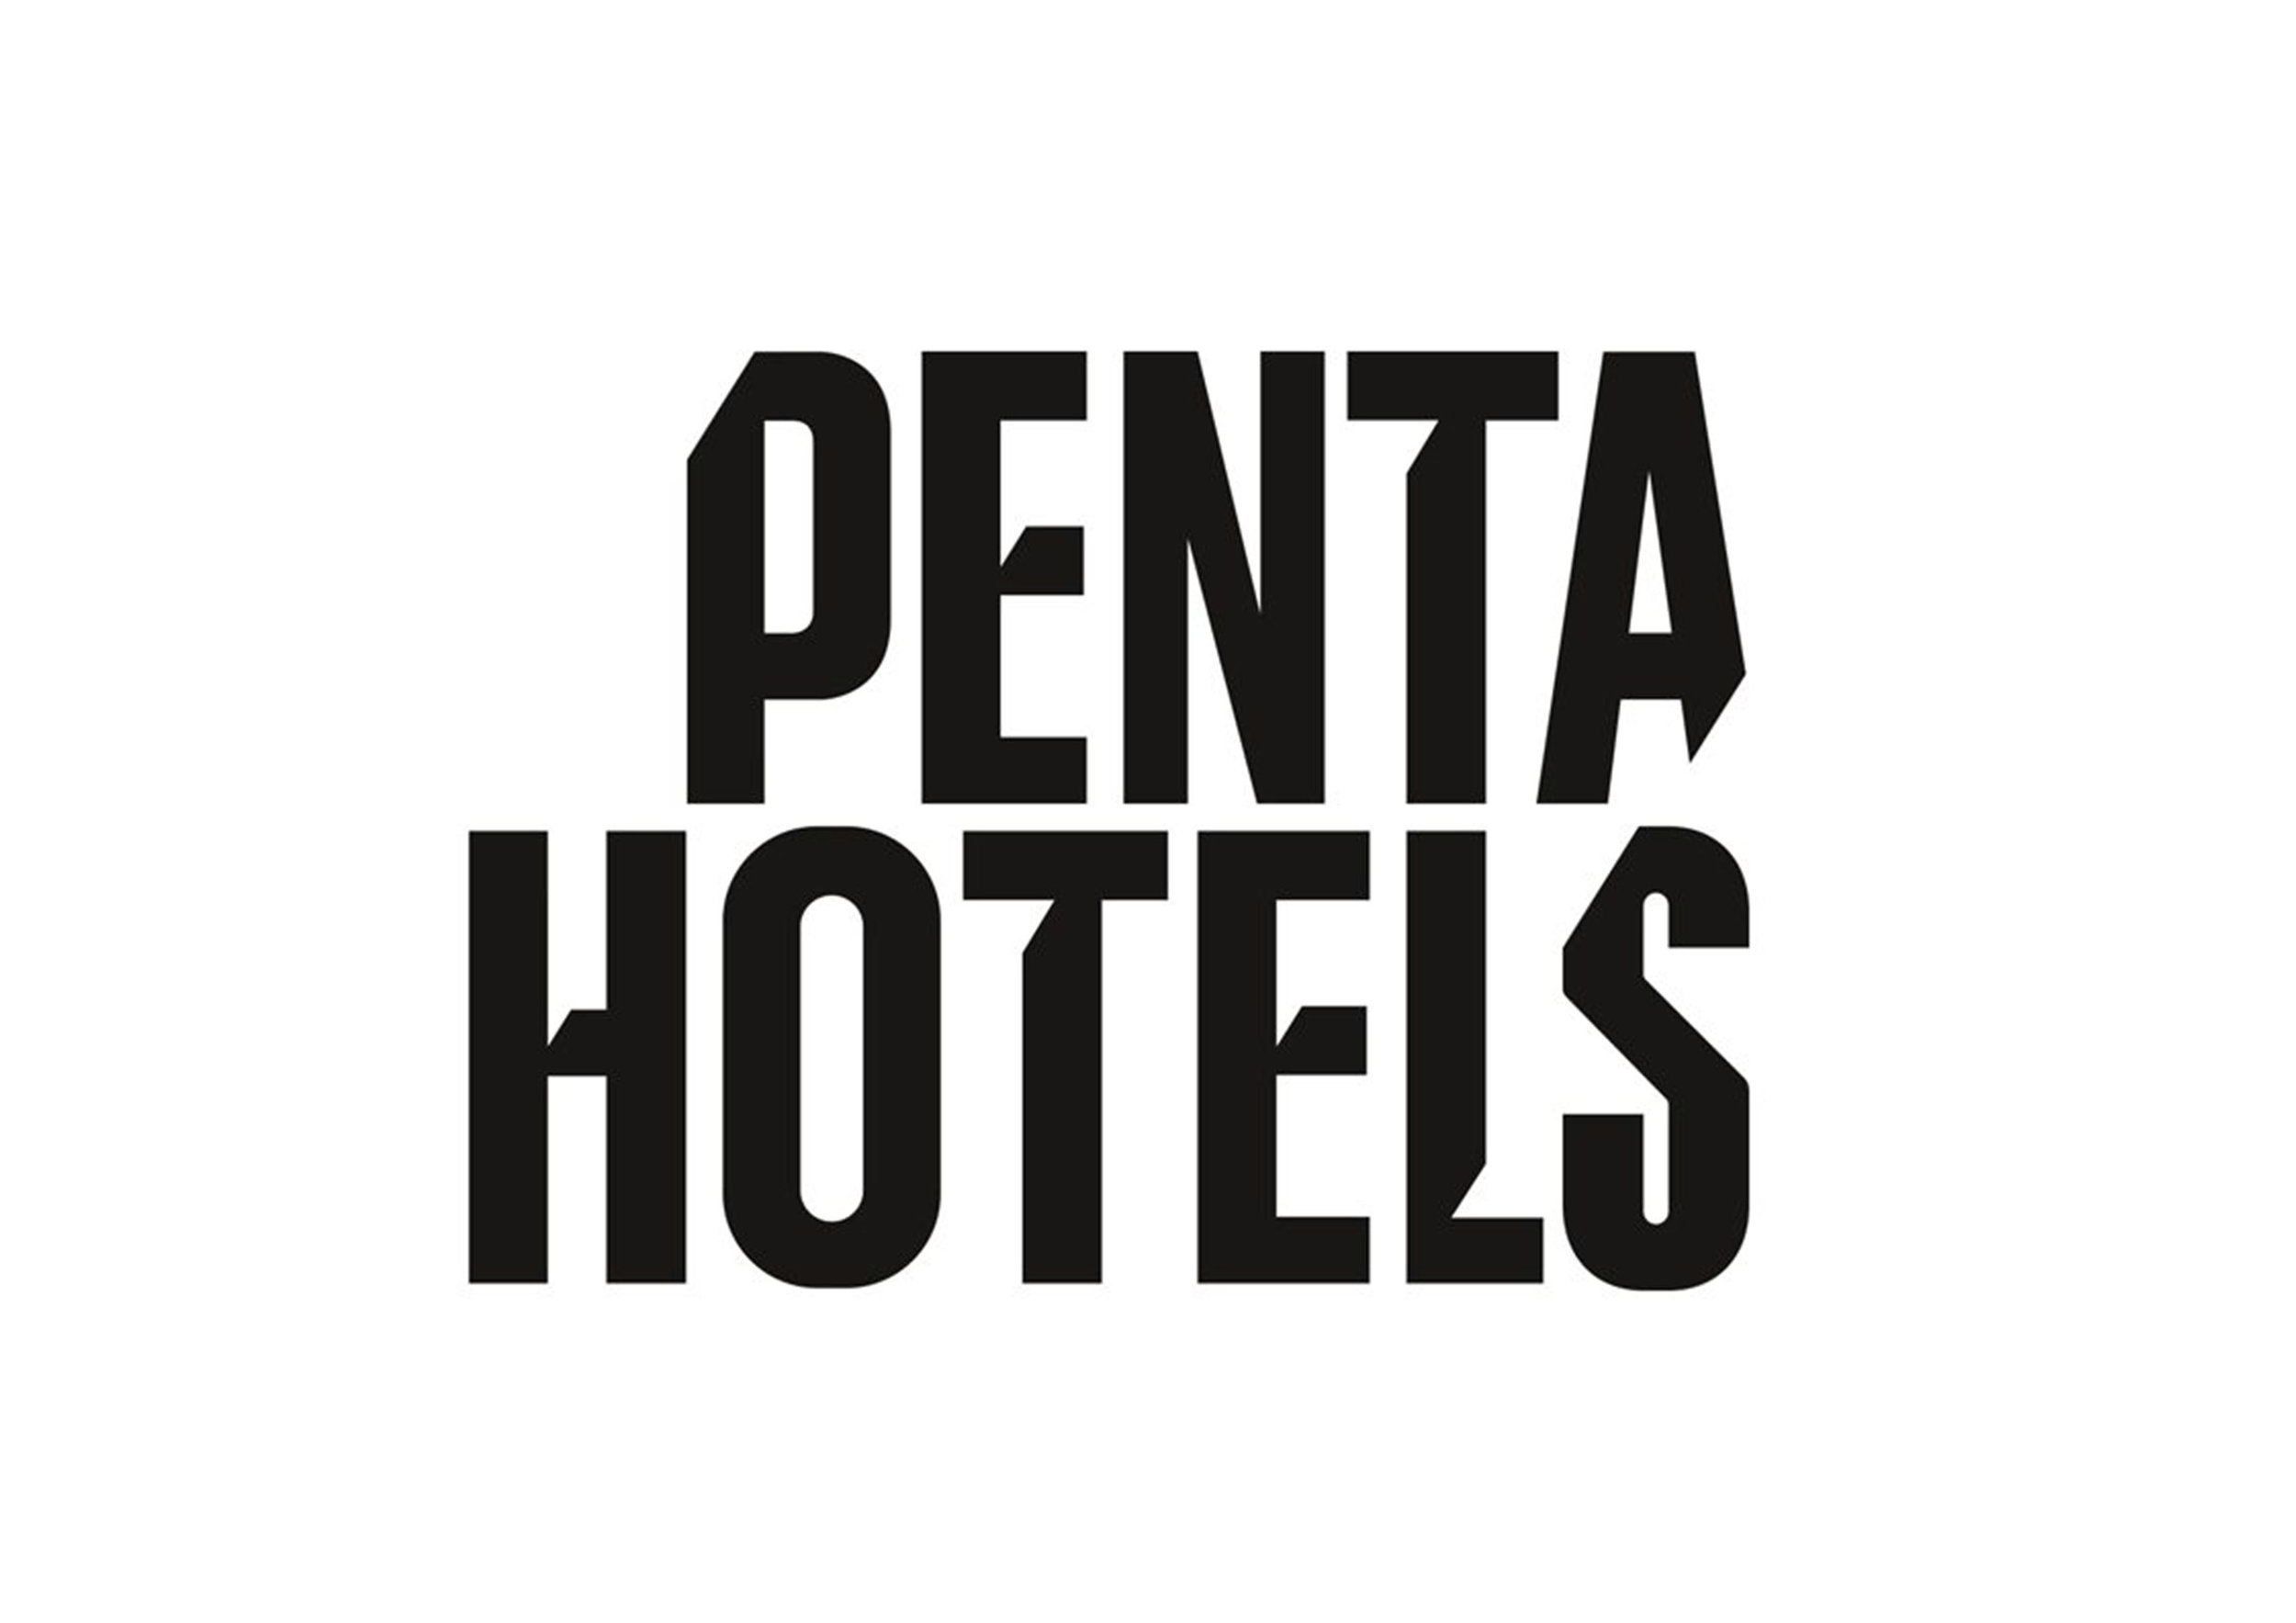  ..  Penta Hotels 